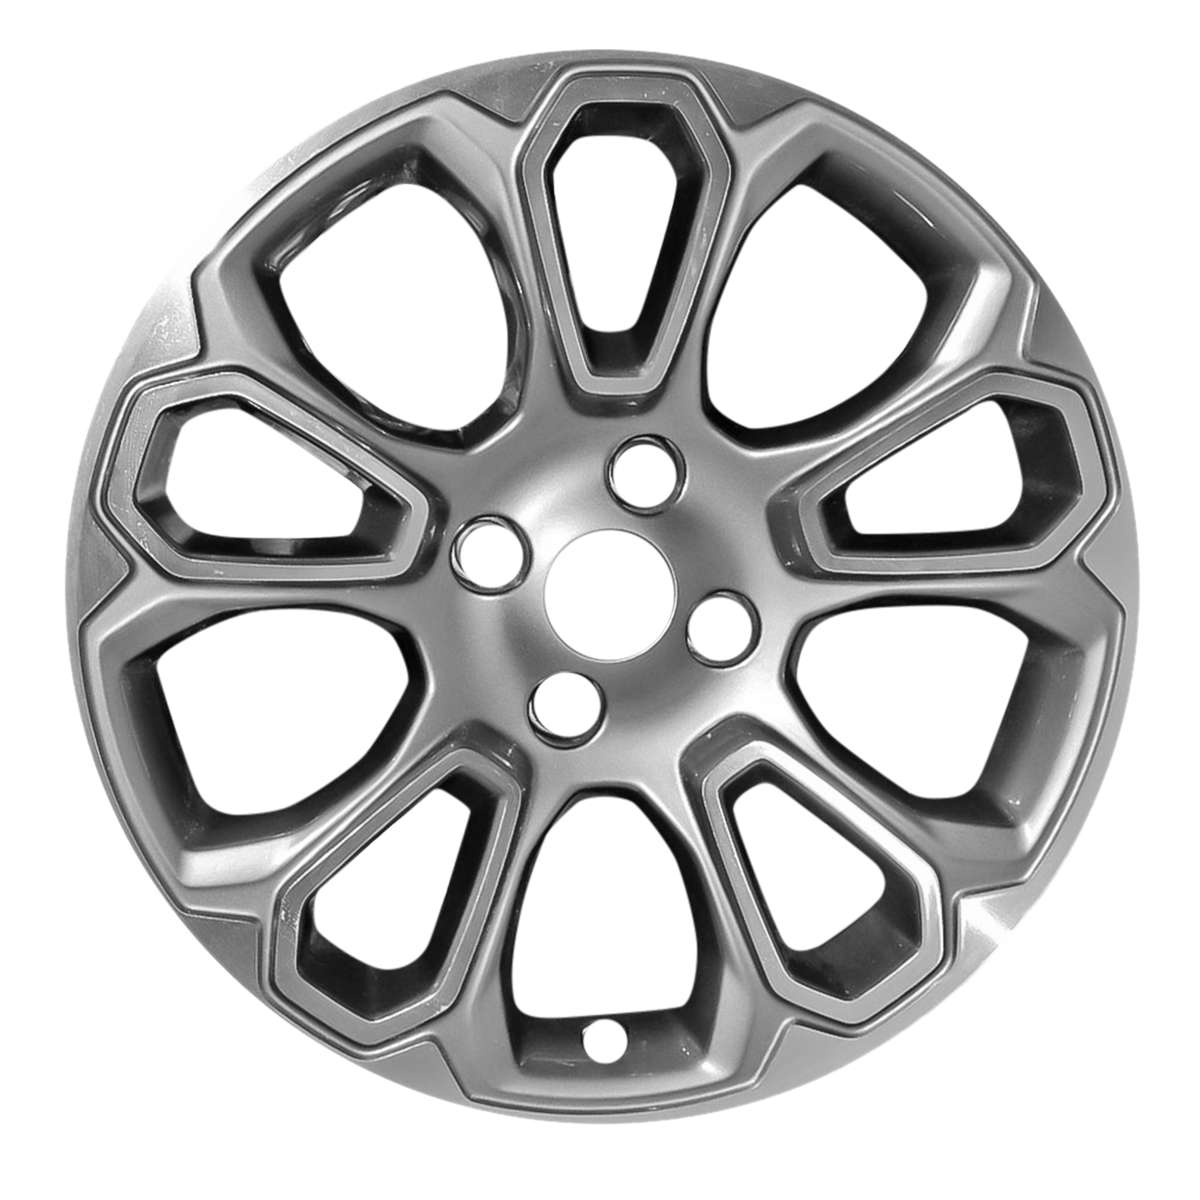 2019 Ford Ecosport 17" OEM Wheel Rim W10152S